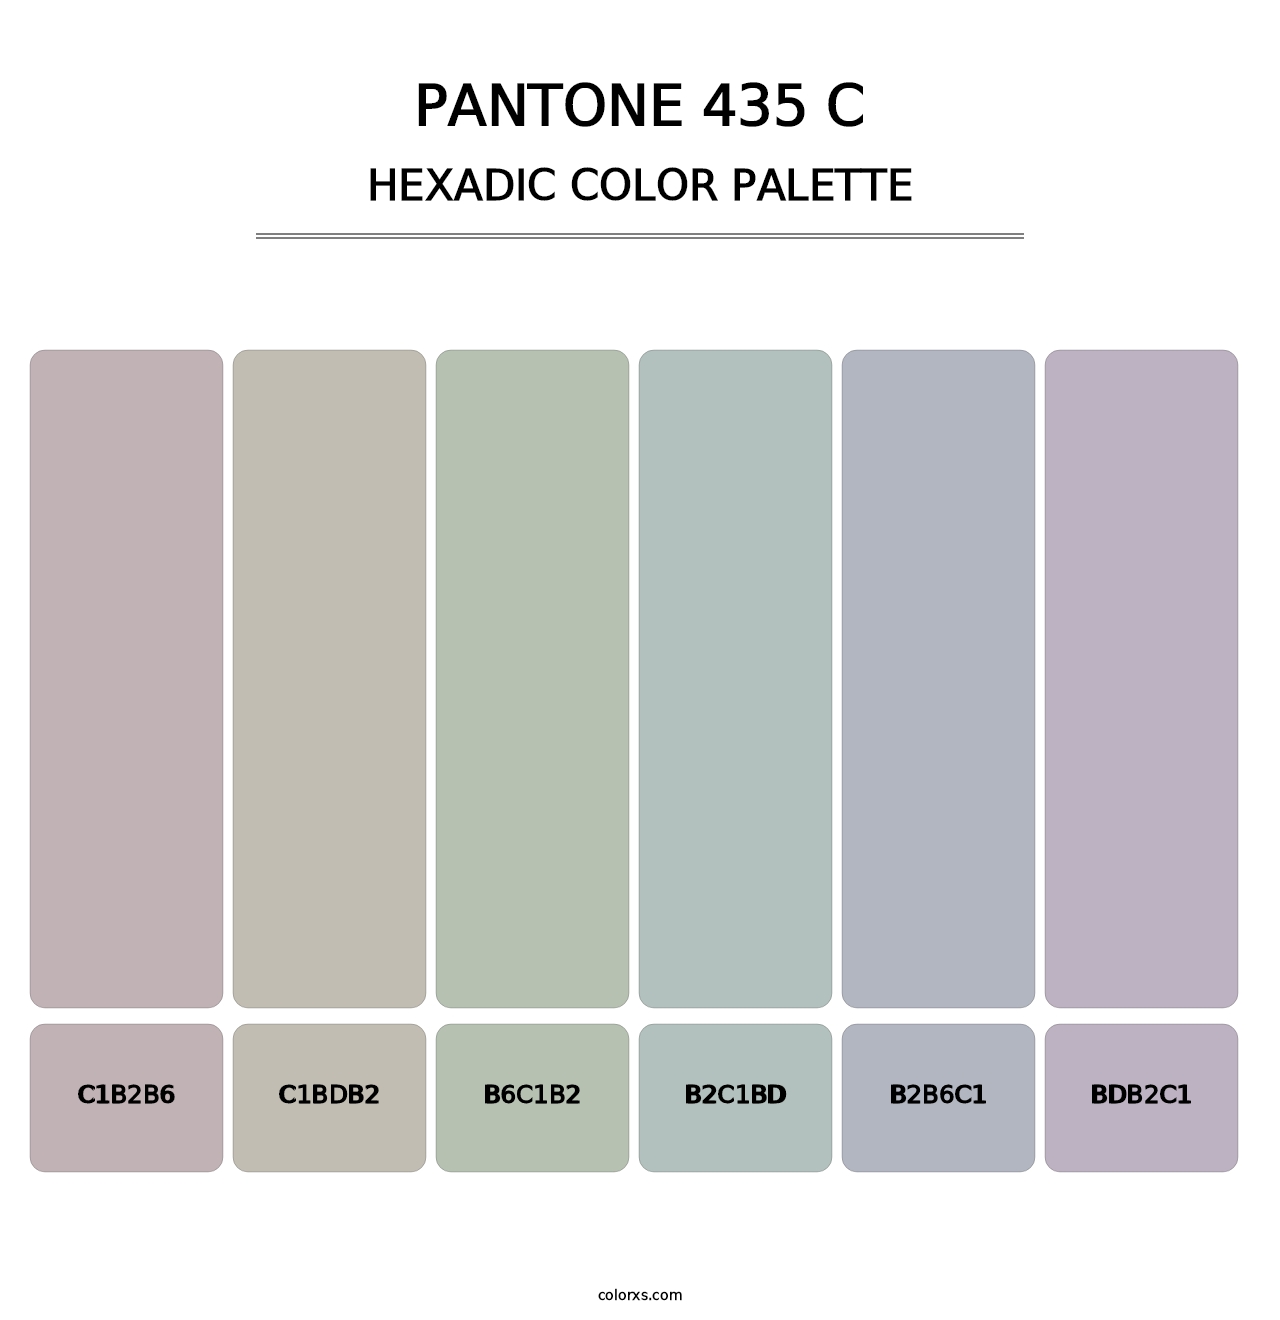 PANTONE 435 C - Hexadic Color Palette